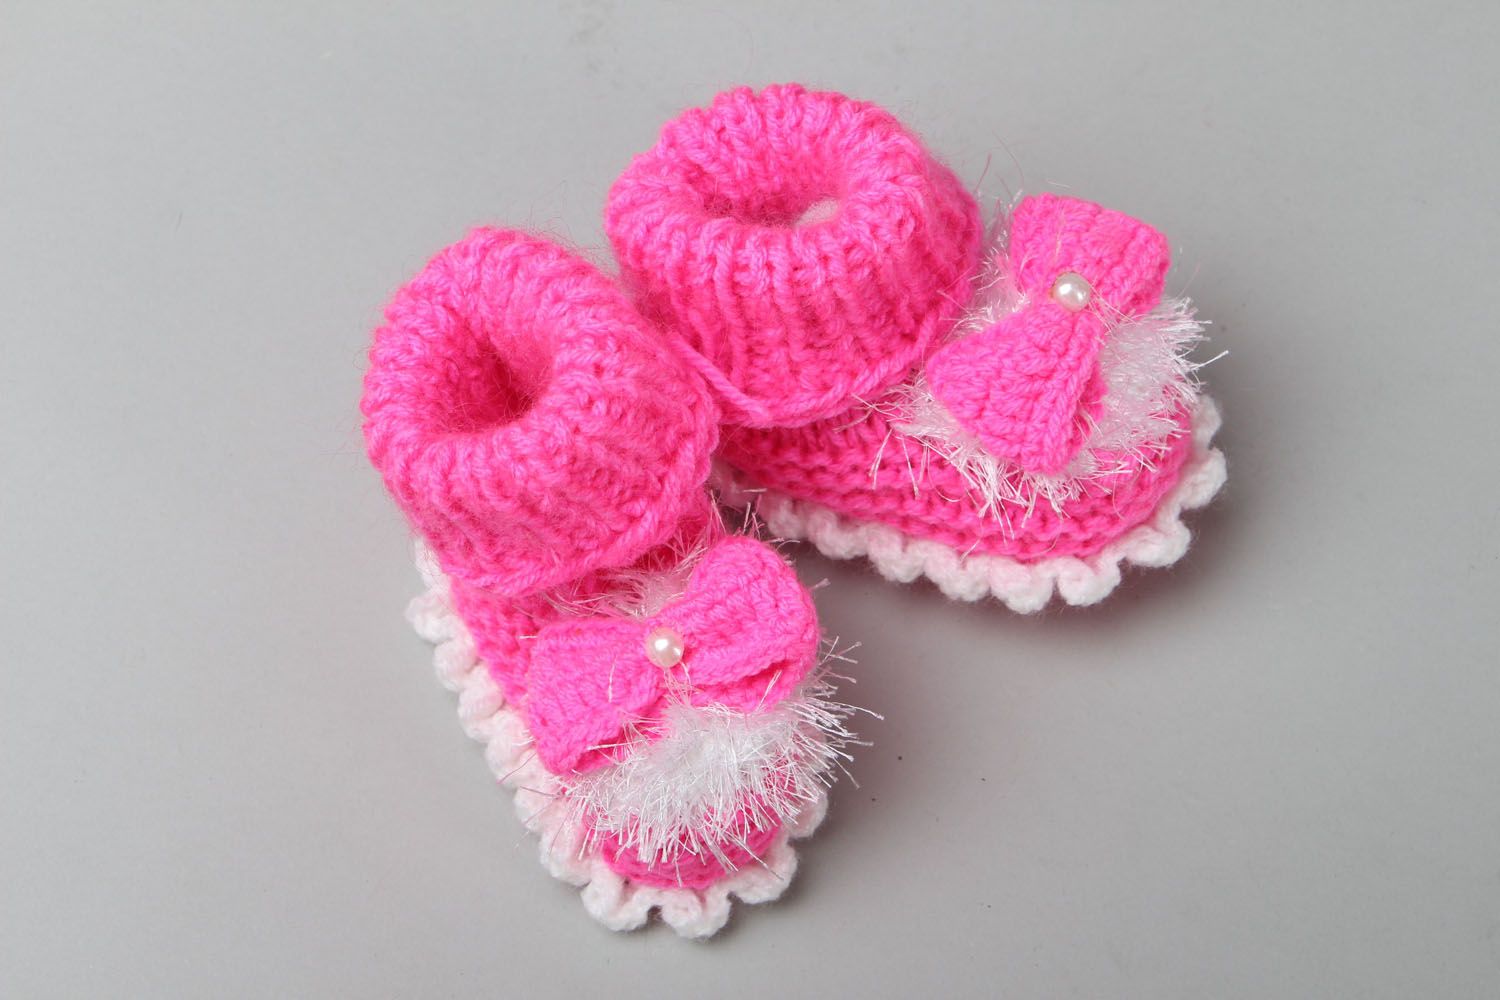 Homemade pink baby booties photo 2